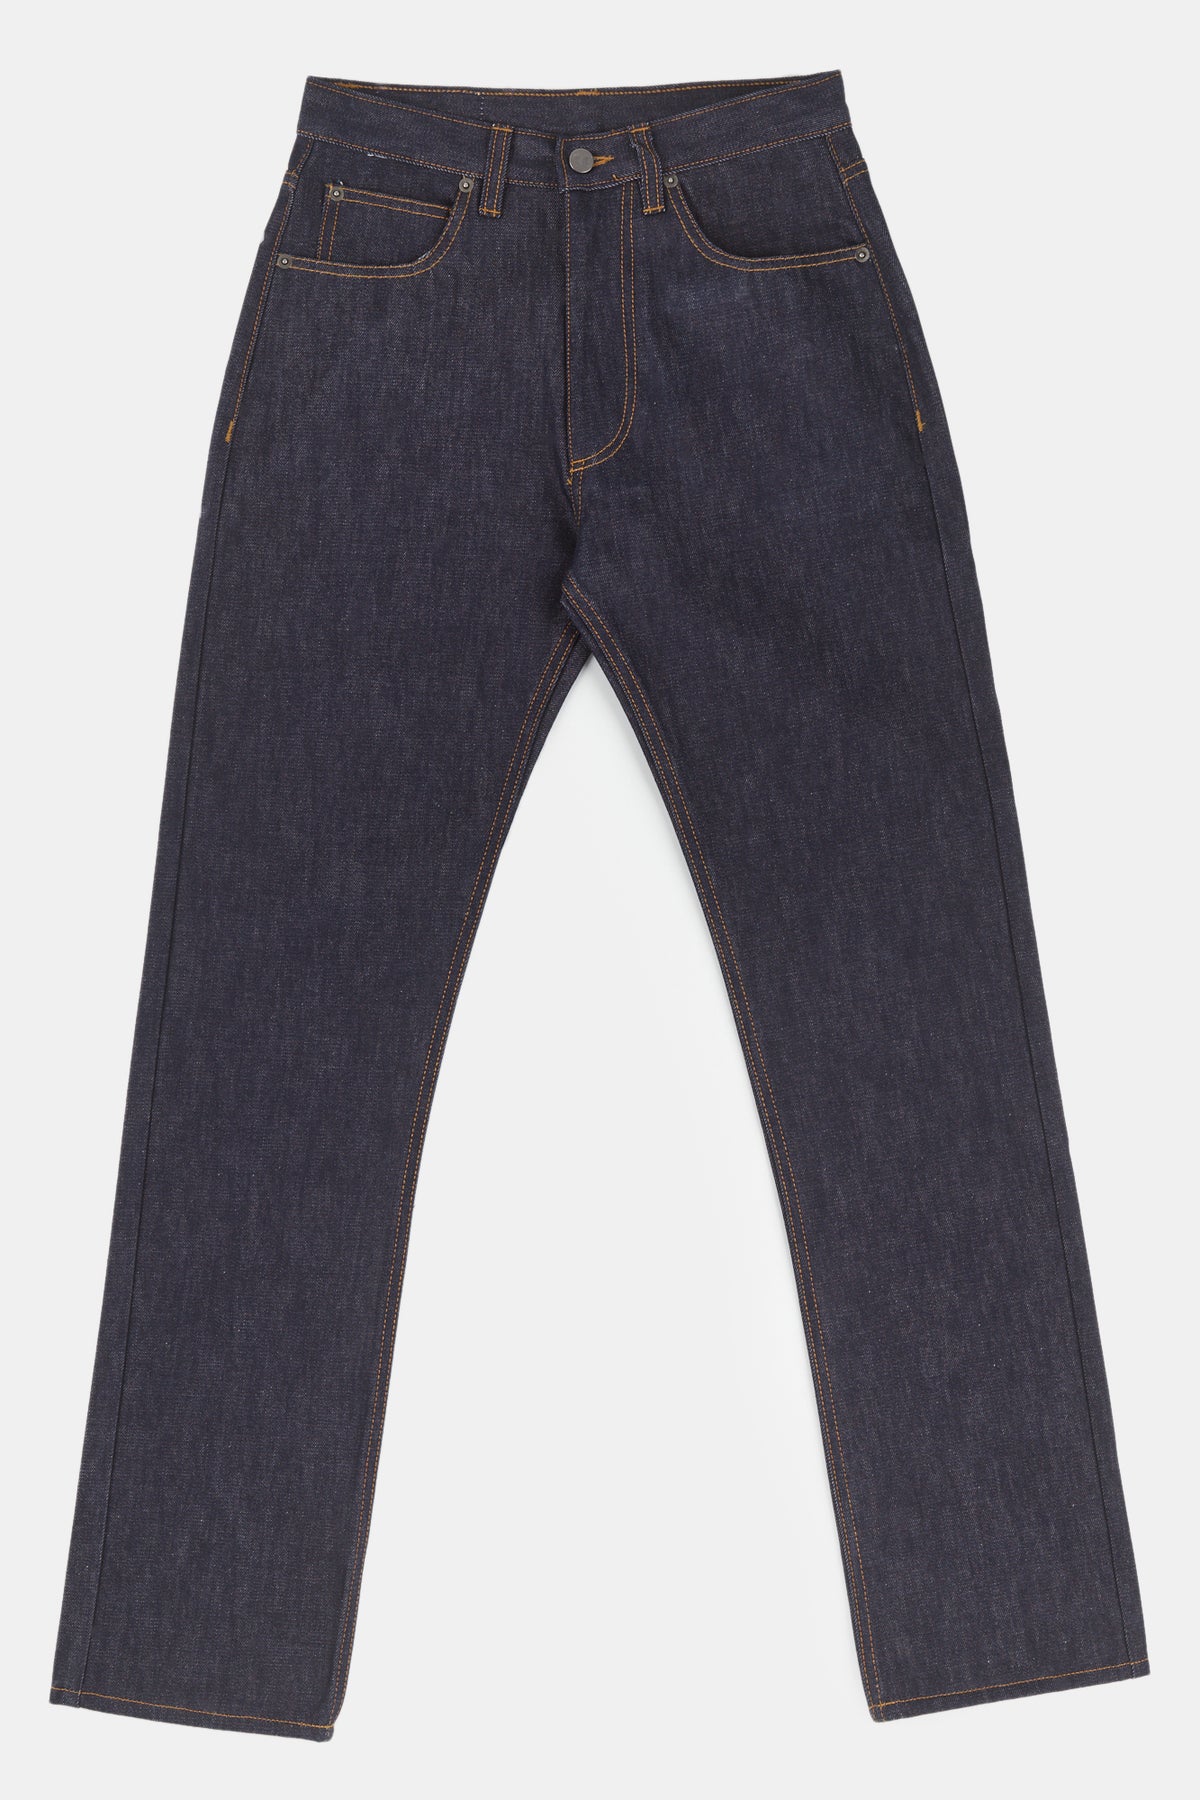 
            Straight cut jeans indigo flatlay image